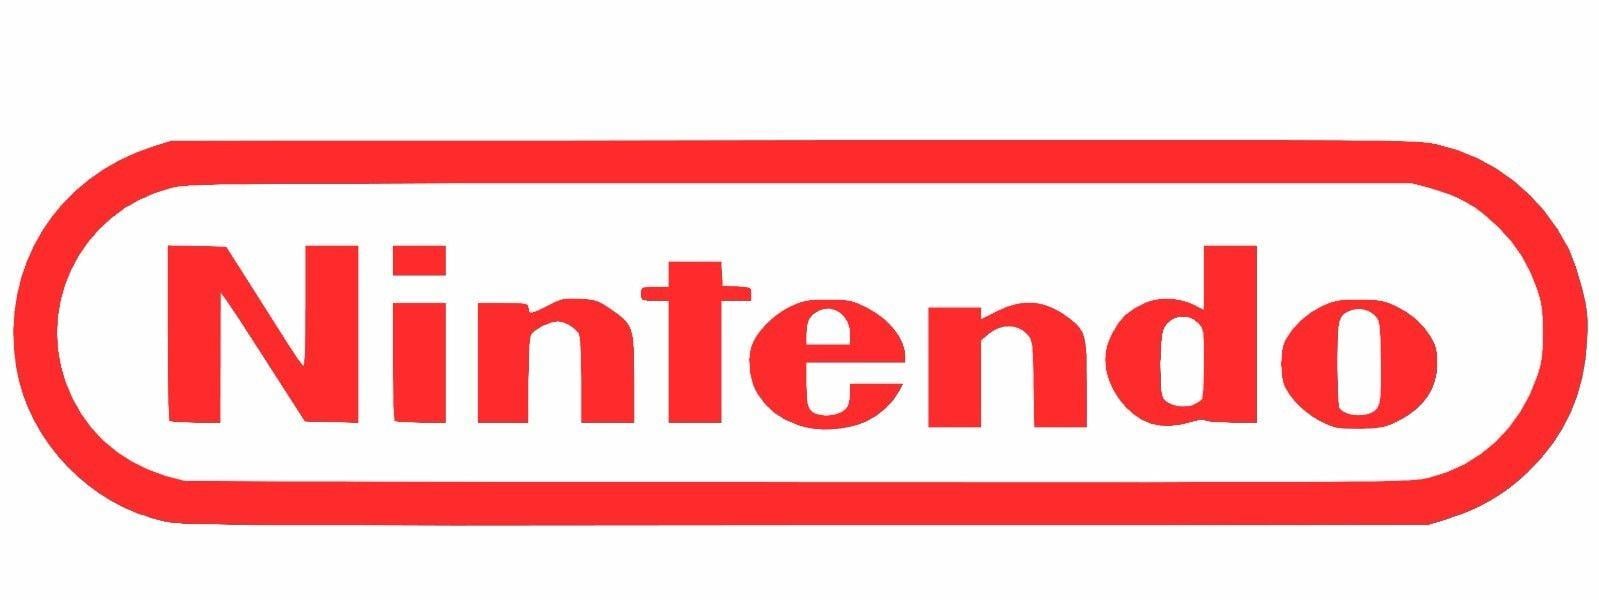 NES Logo - Nintendo Logo replacement decal